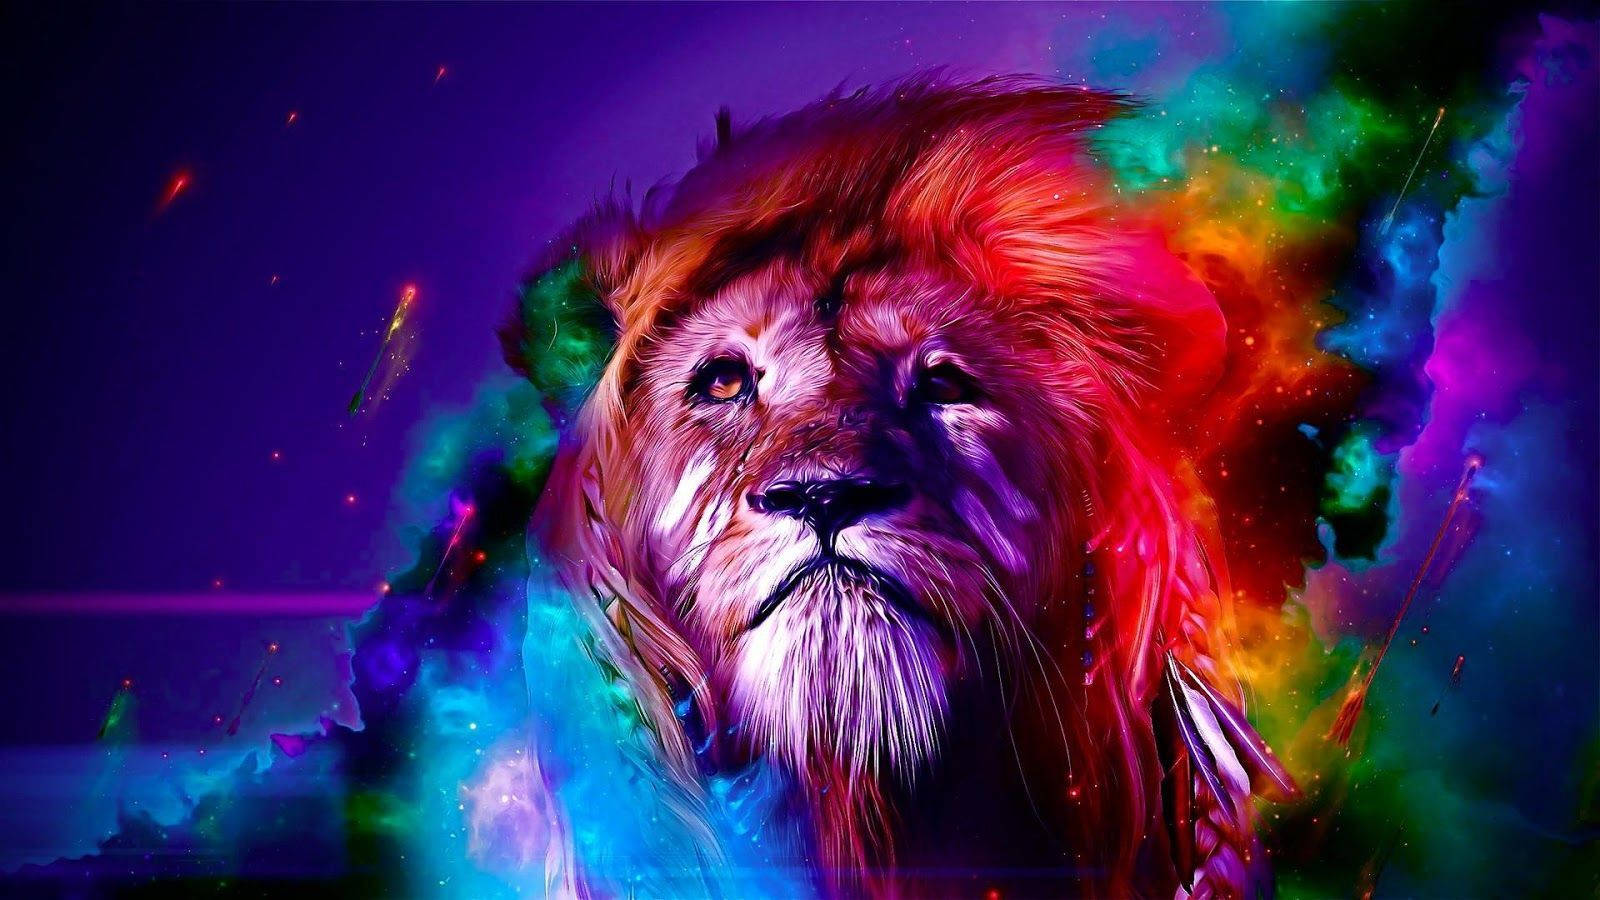 Colorful Art Lion Galaxy Wallpaper